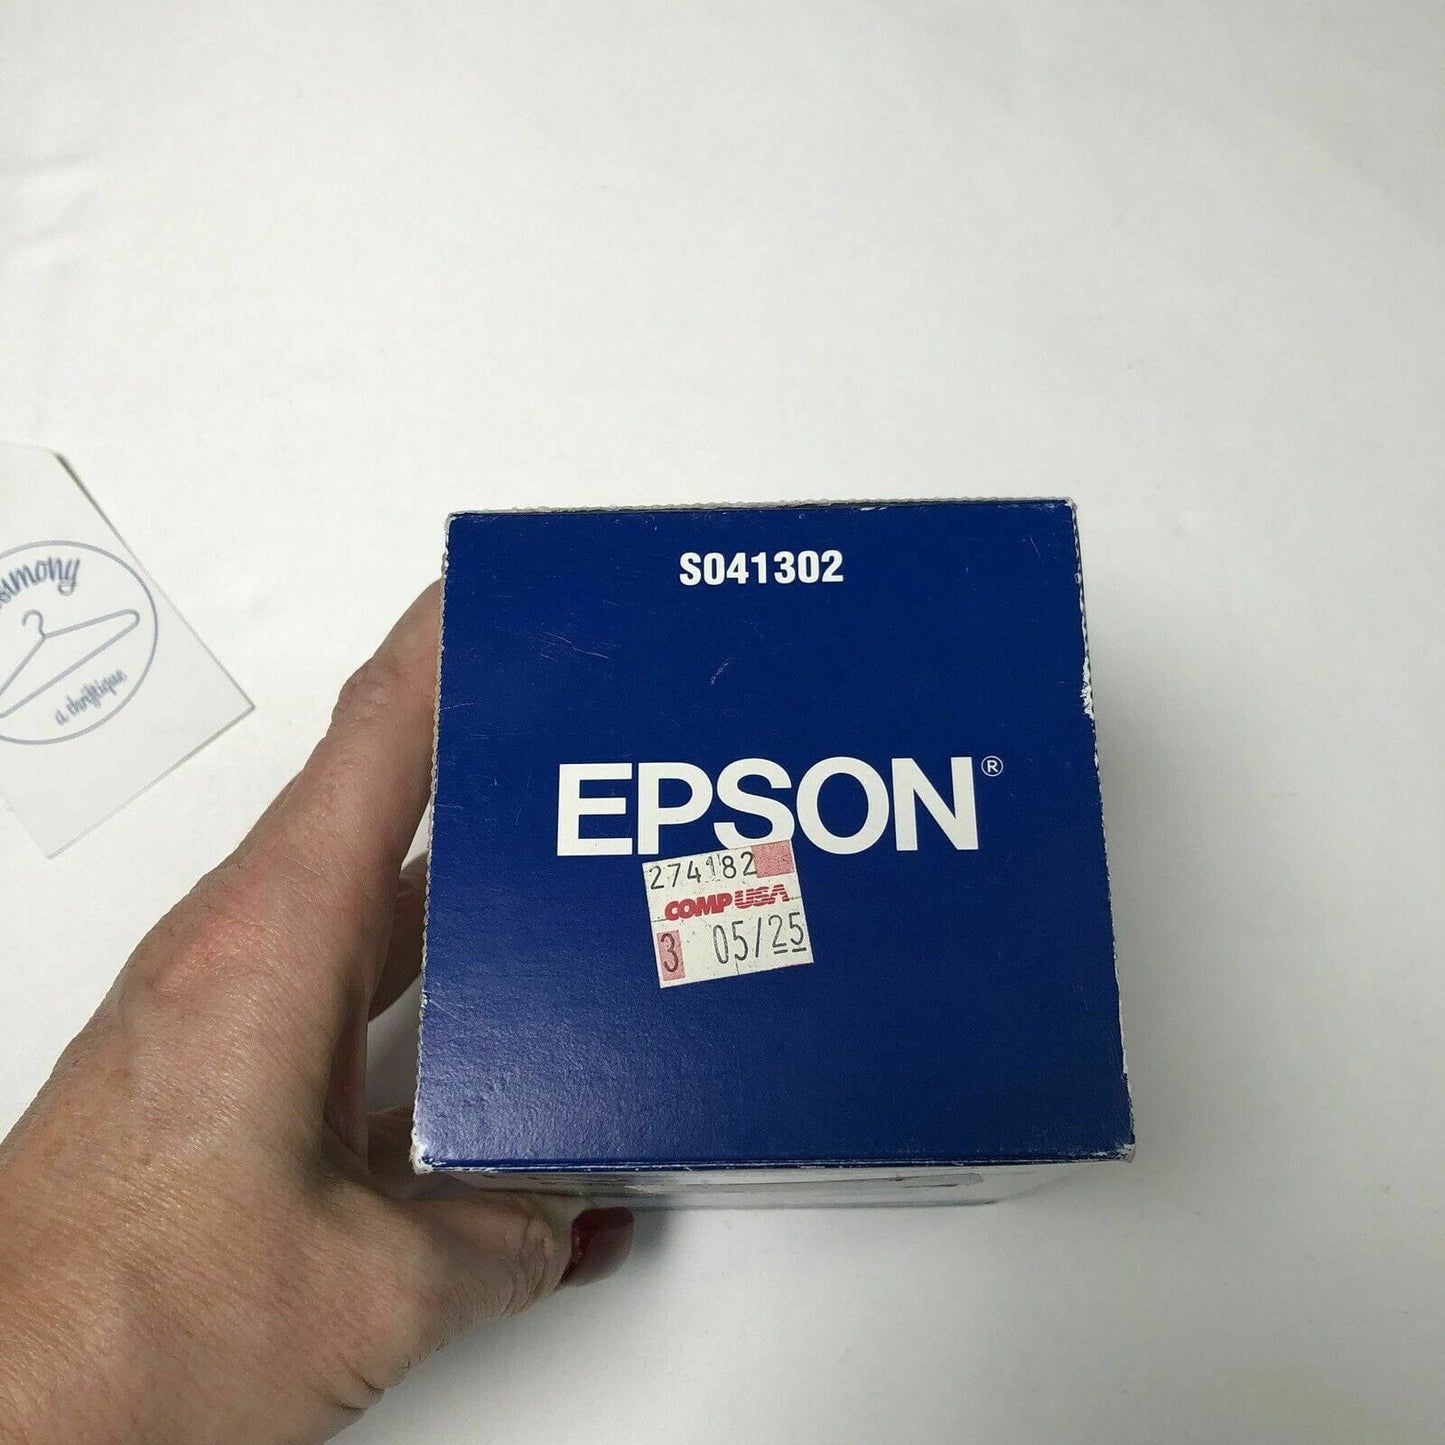 Epson Premium Glossy Photo Paper Roll 4” X 26’ - S041302 - Open Box New